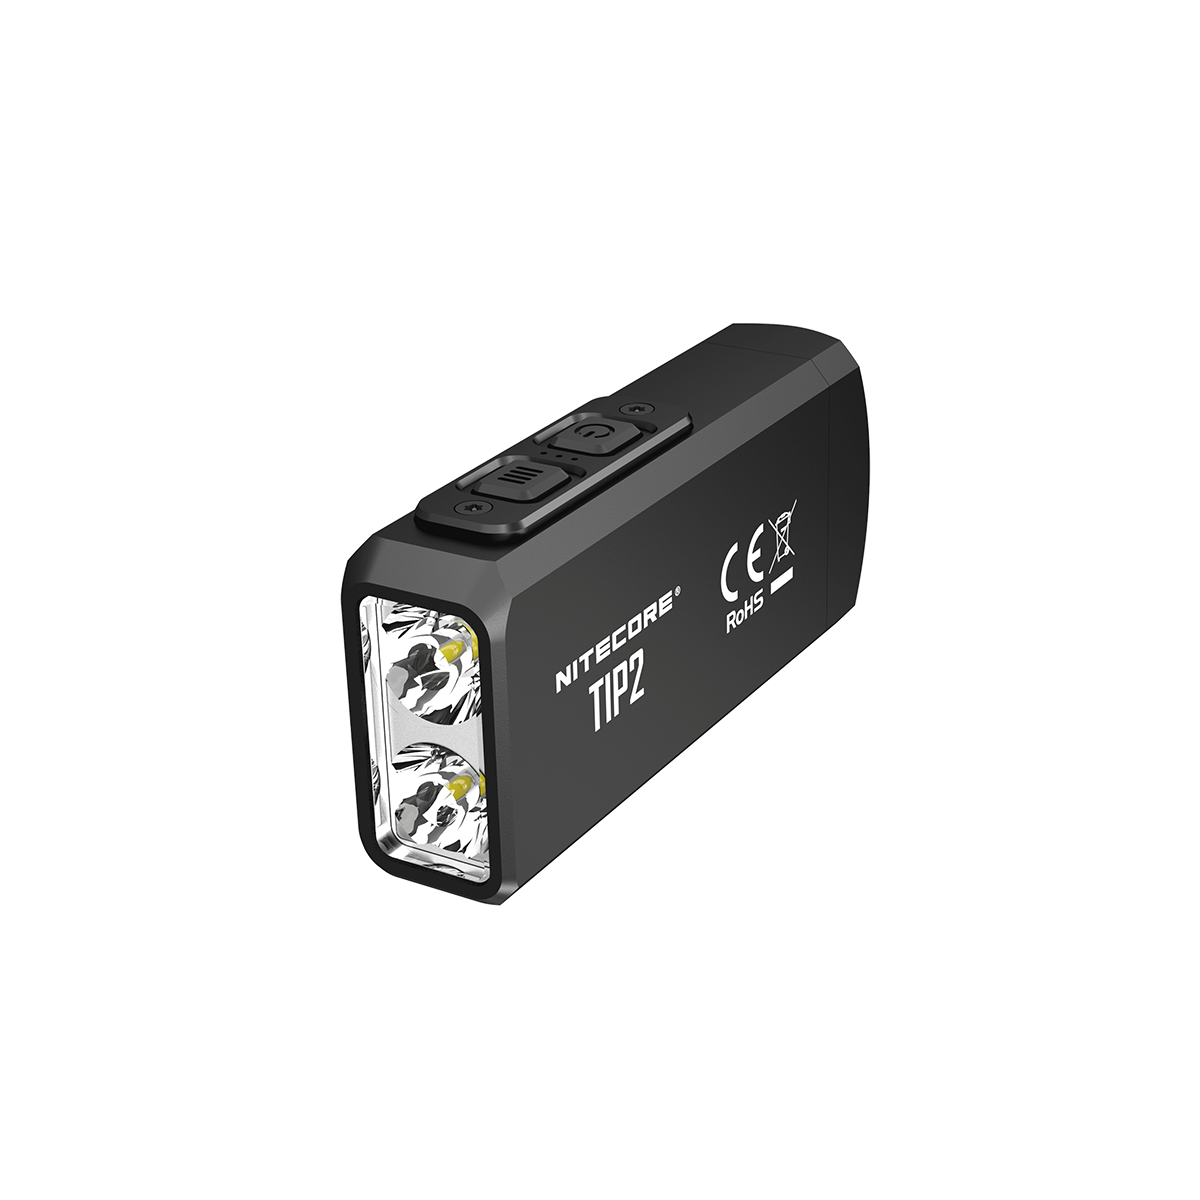 Nitecore TIP2  XP-G3 S3 LED 720 Lumens Micro USB Rechargeable Magnetic Keychain Light EDC Lights